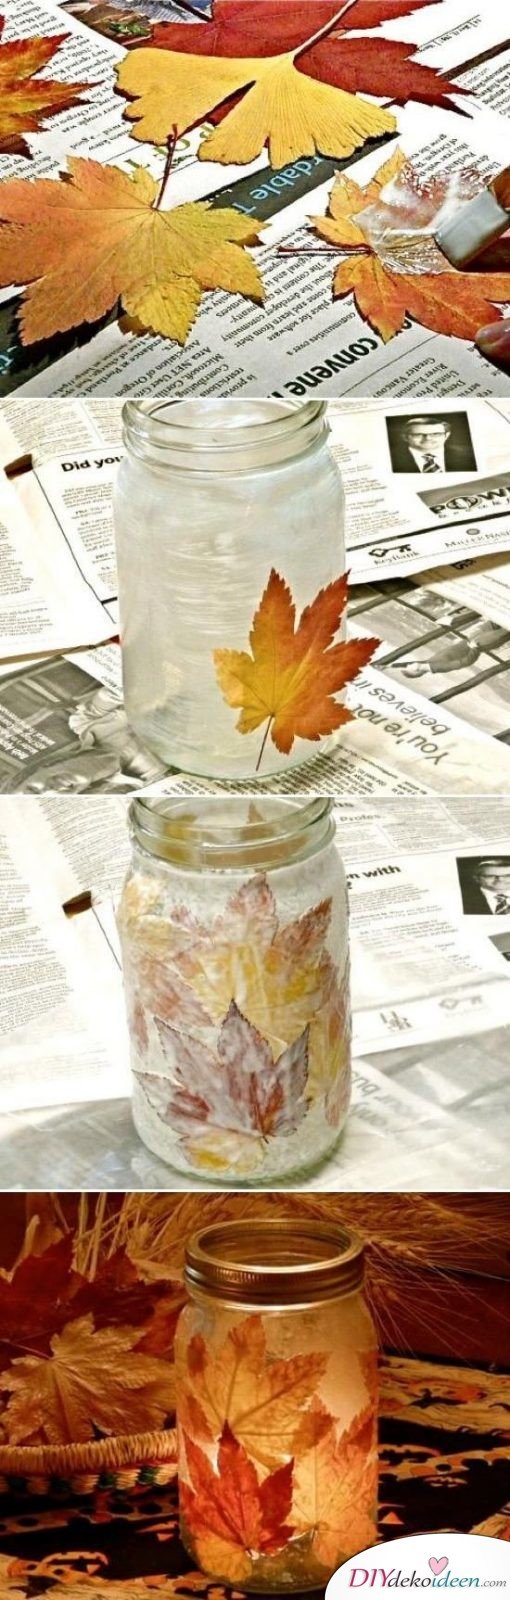 Herbstdeko basteln mit Blättern - Herbst-Kerzenglas